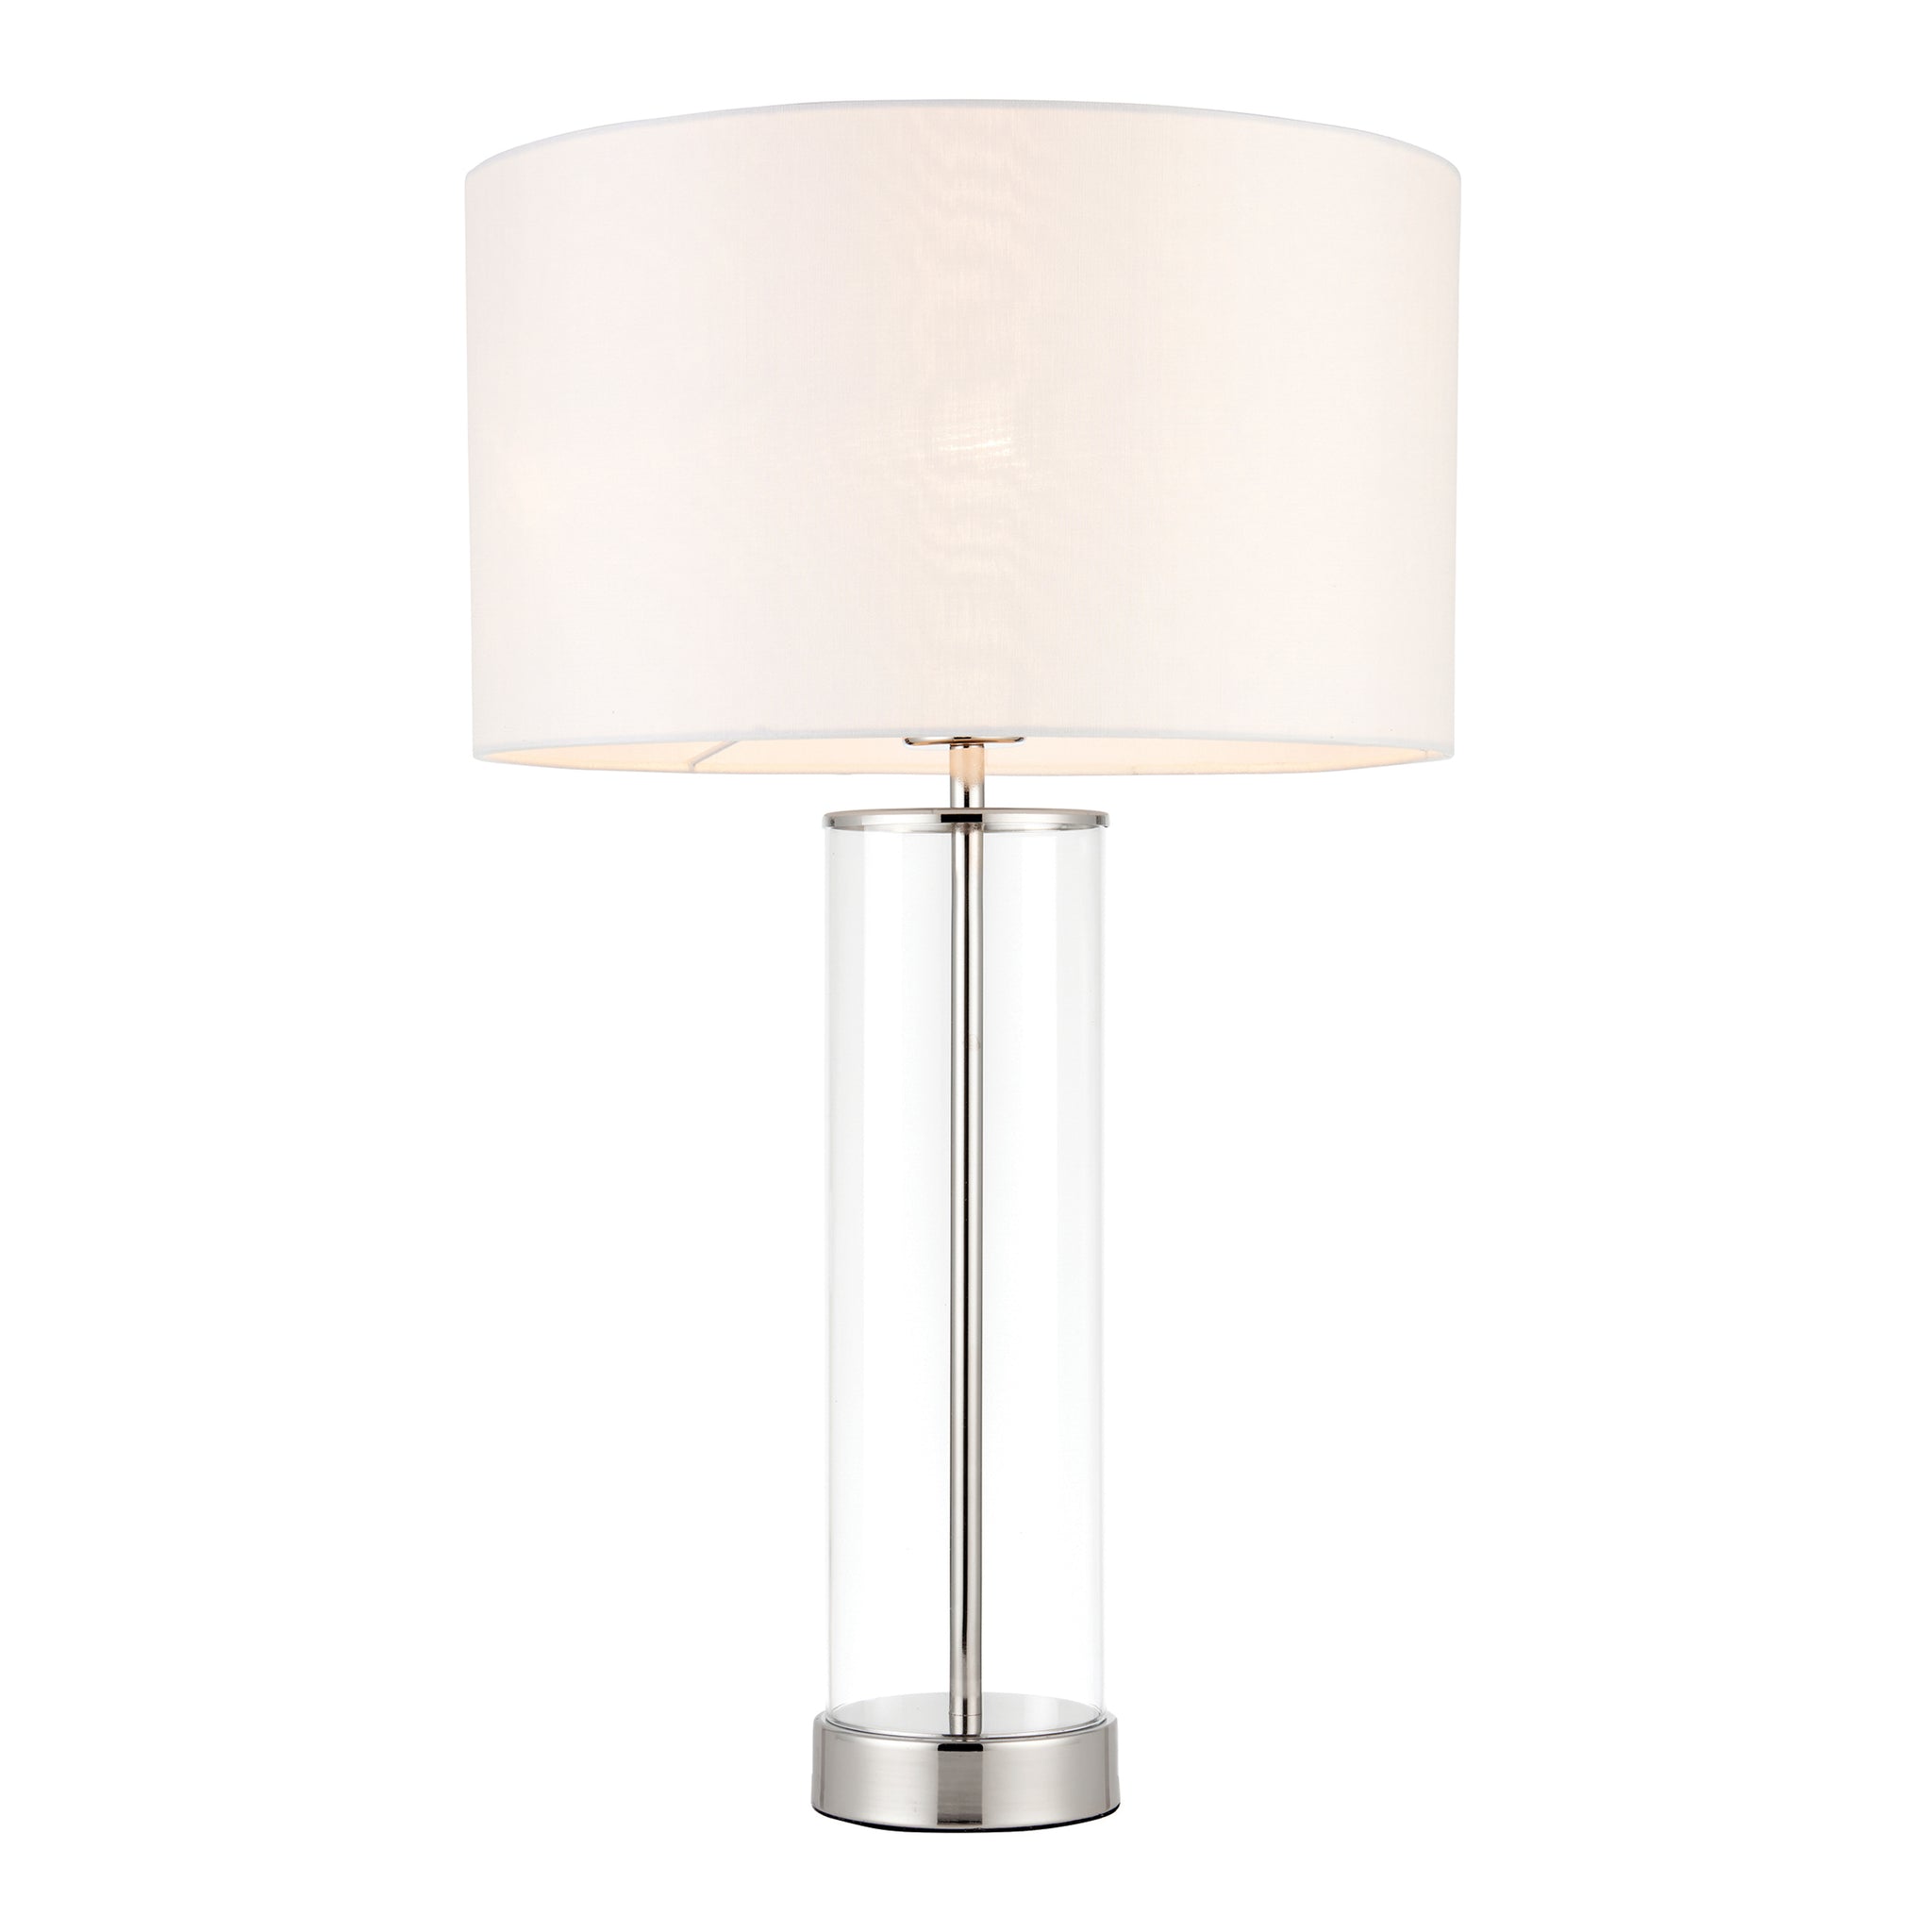 Lucine Table Lamp Bright Nickel